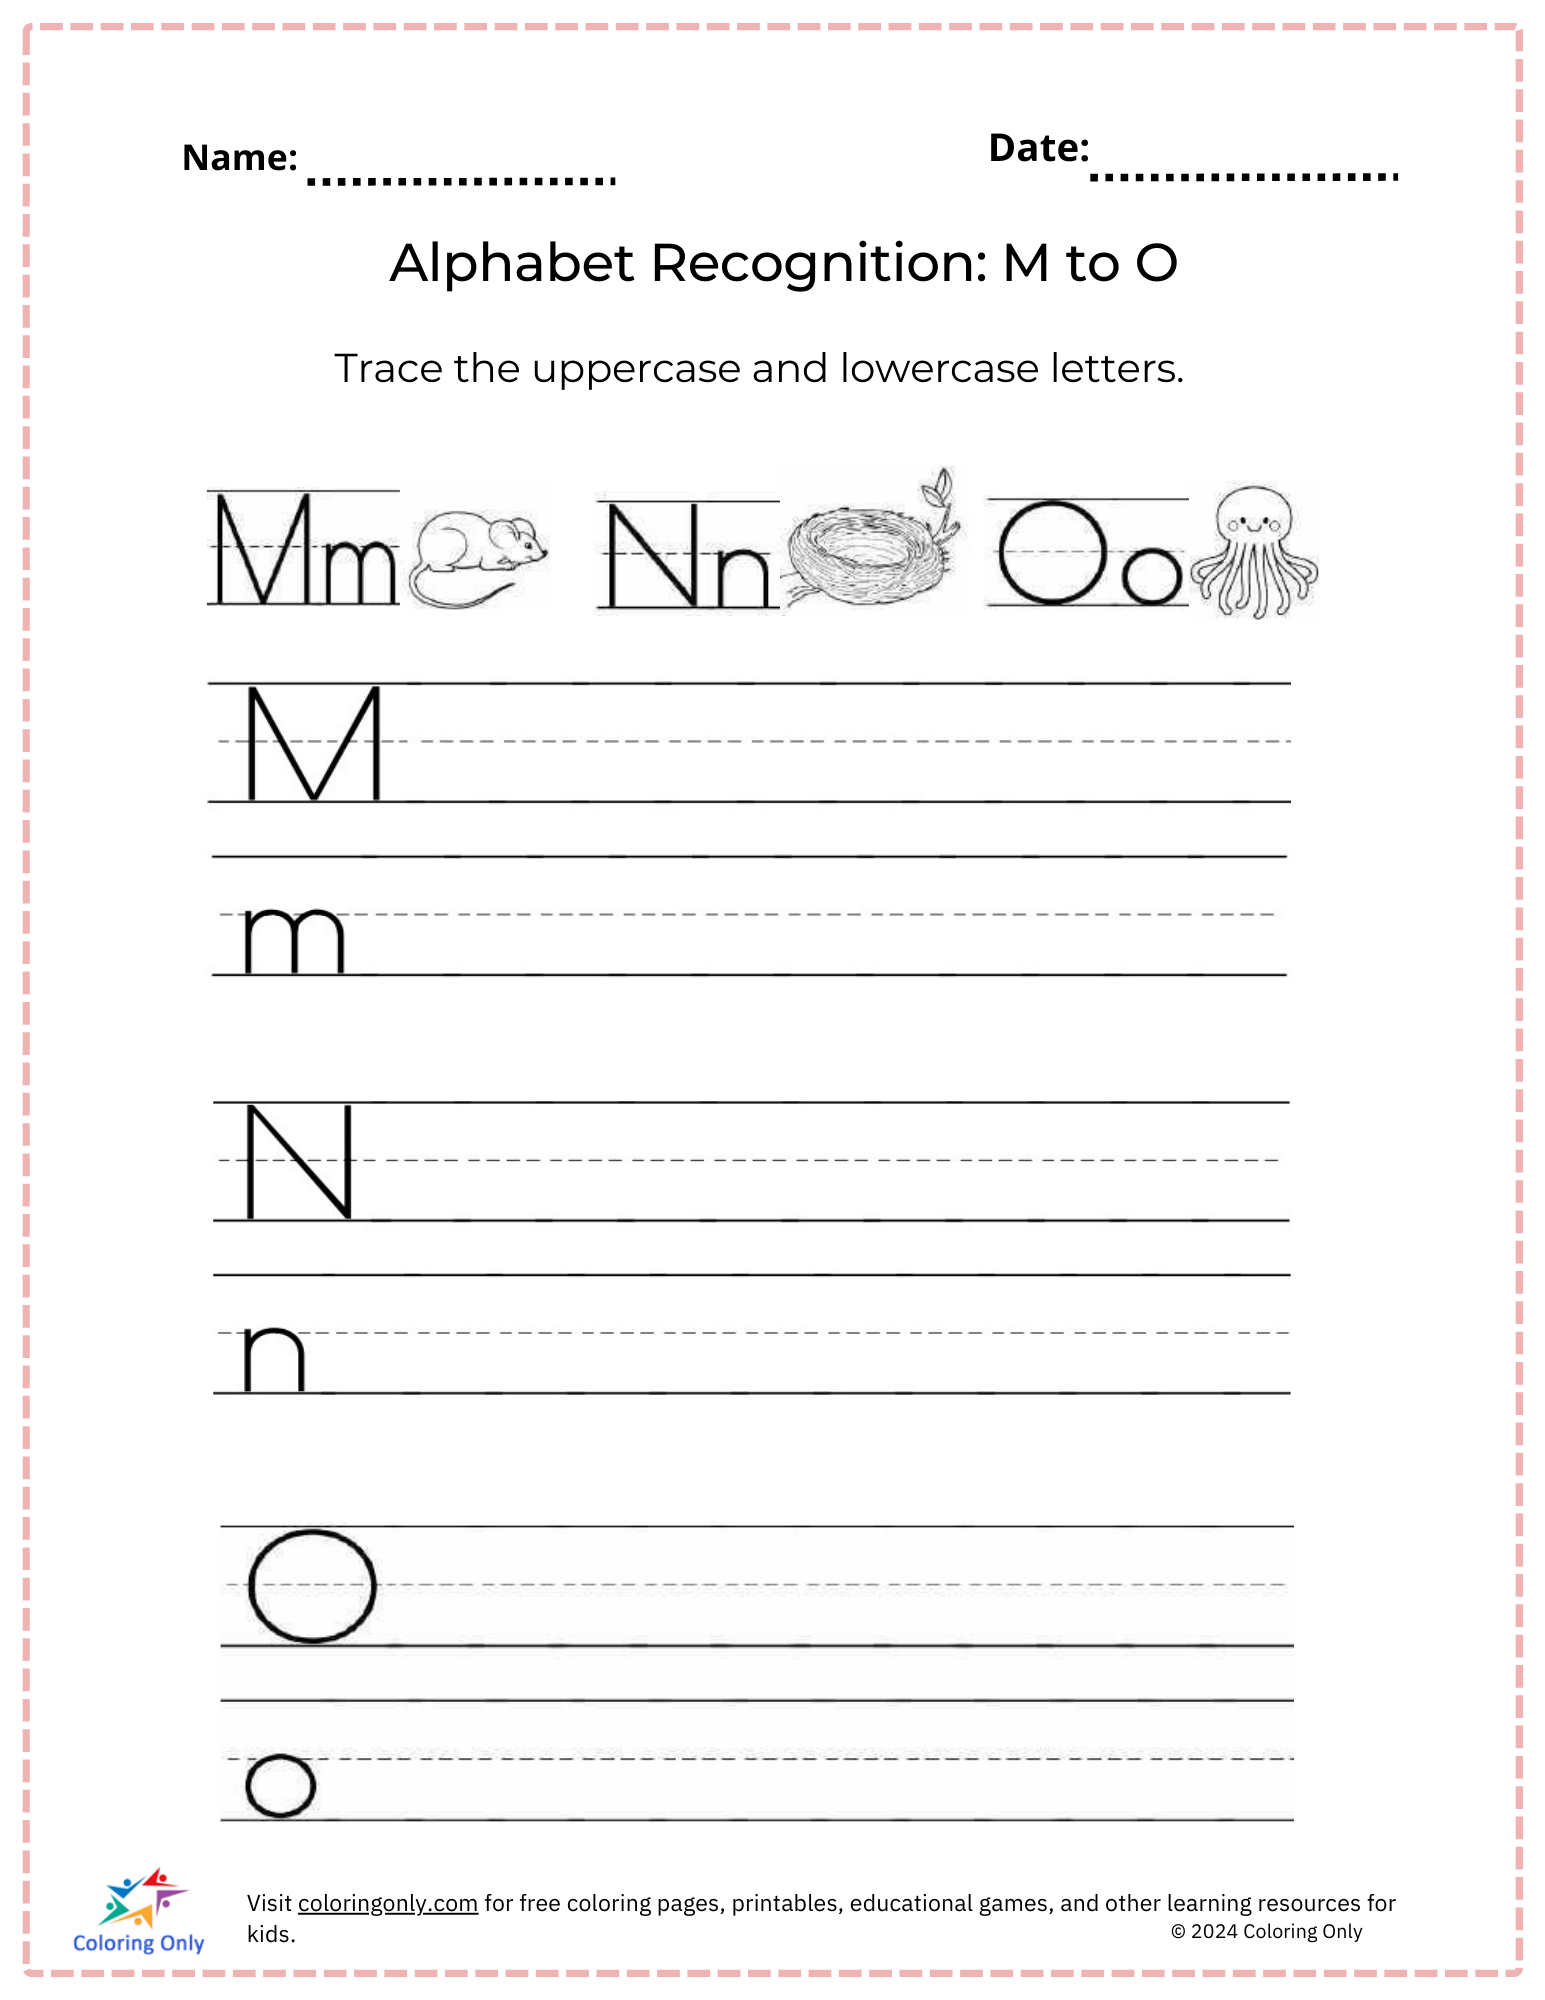 Alphabet Recognition: M to O Free Printable Worksheet